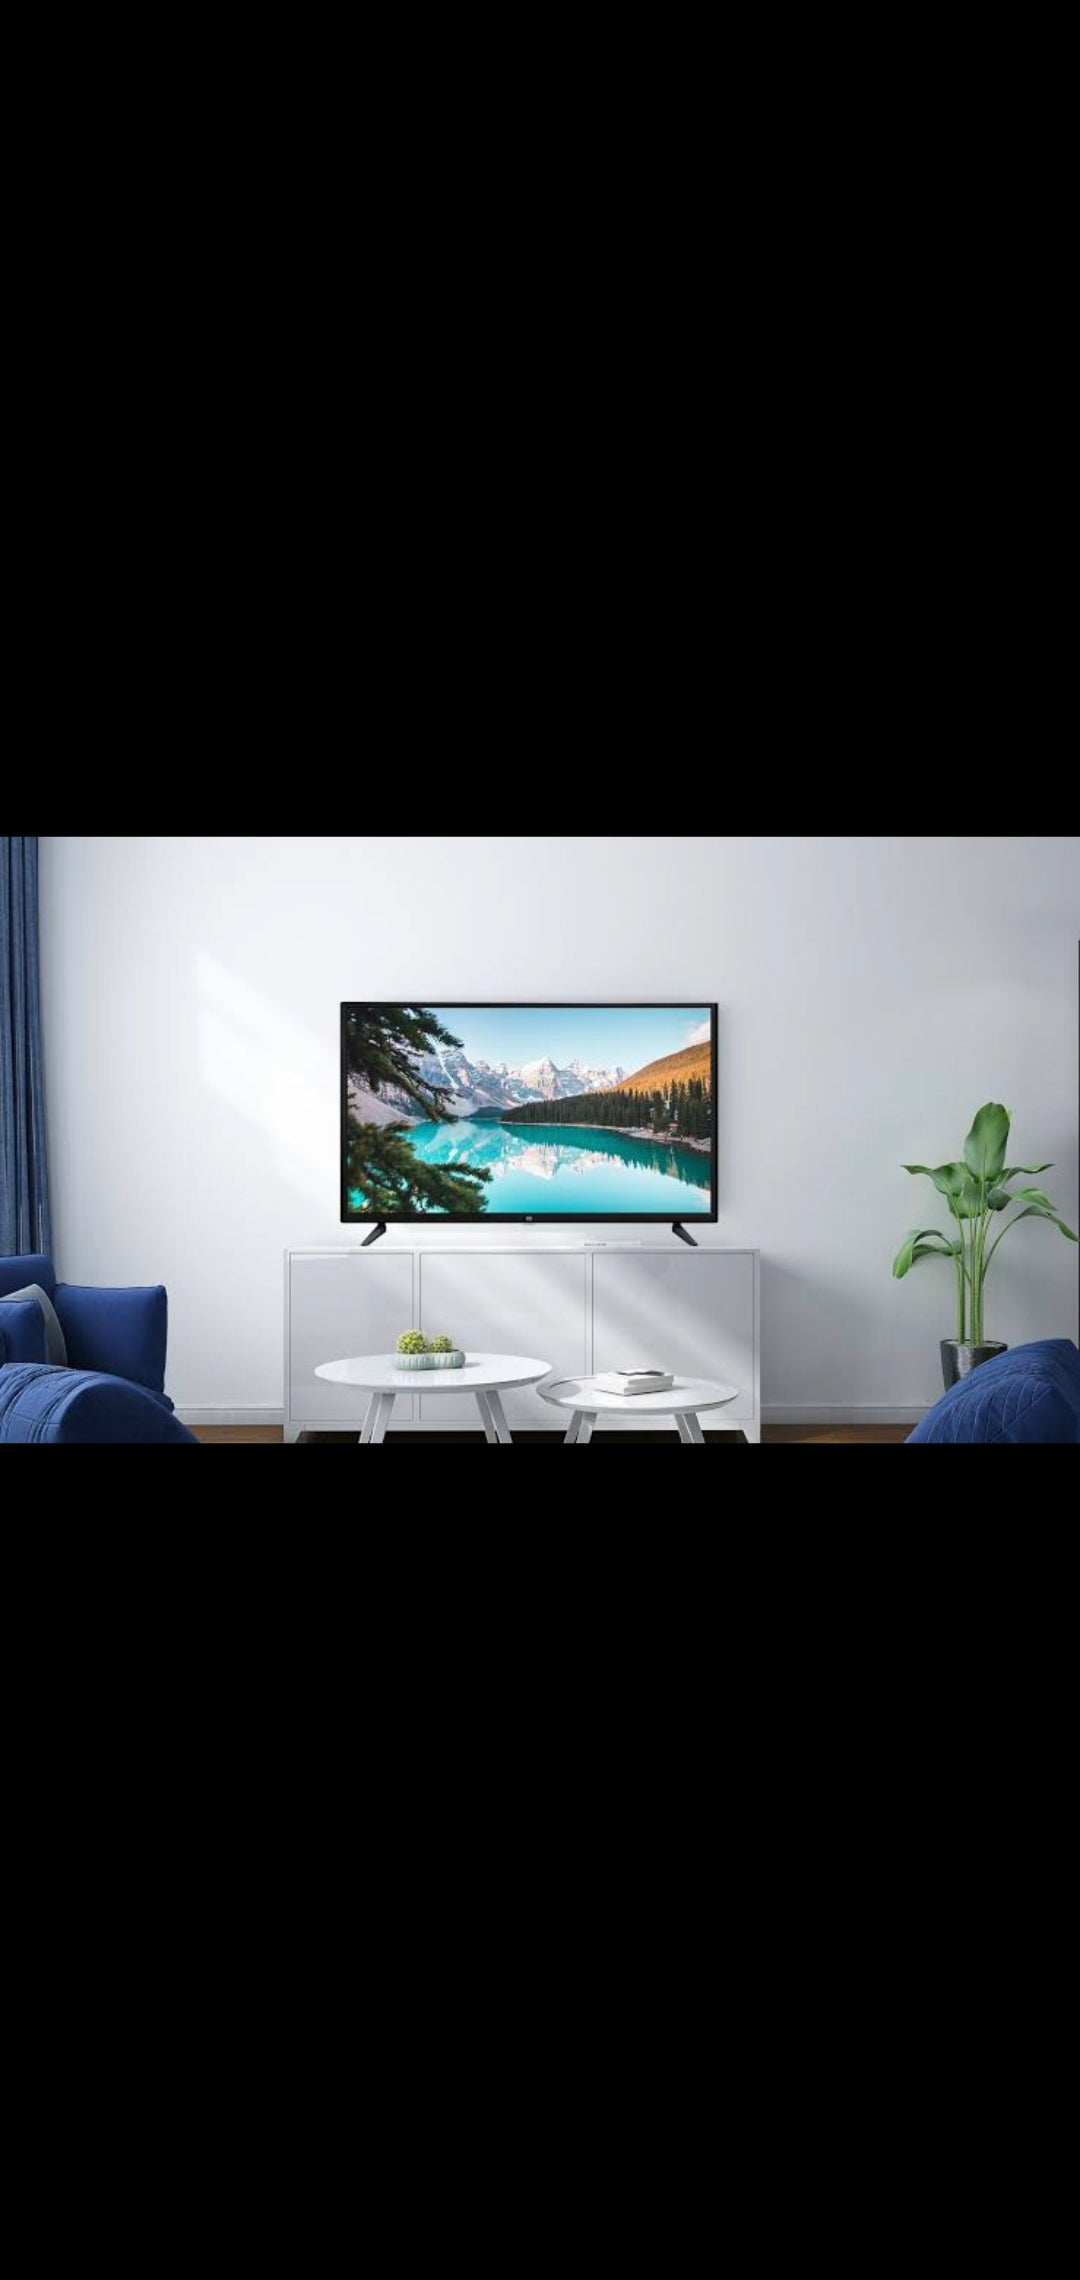 Fussion 32 inch smart tv